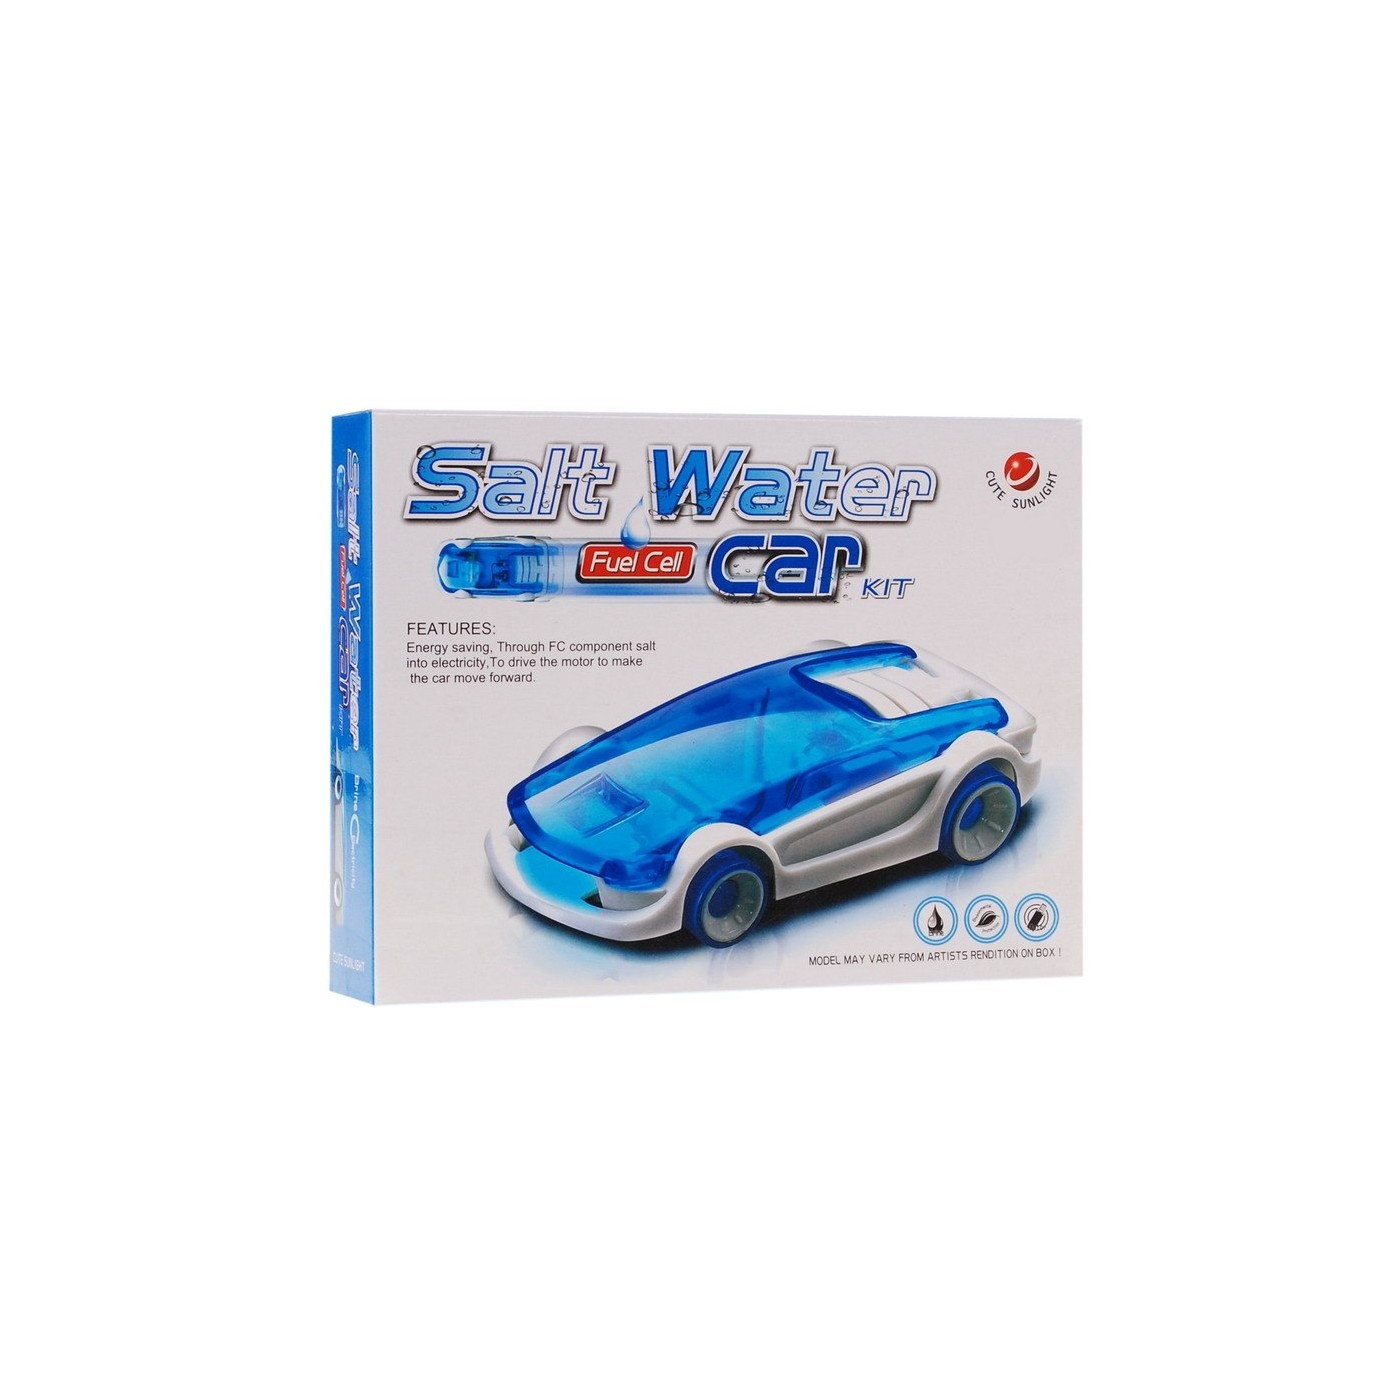 Salt water car